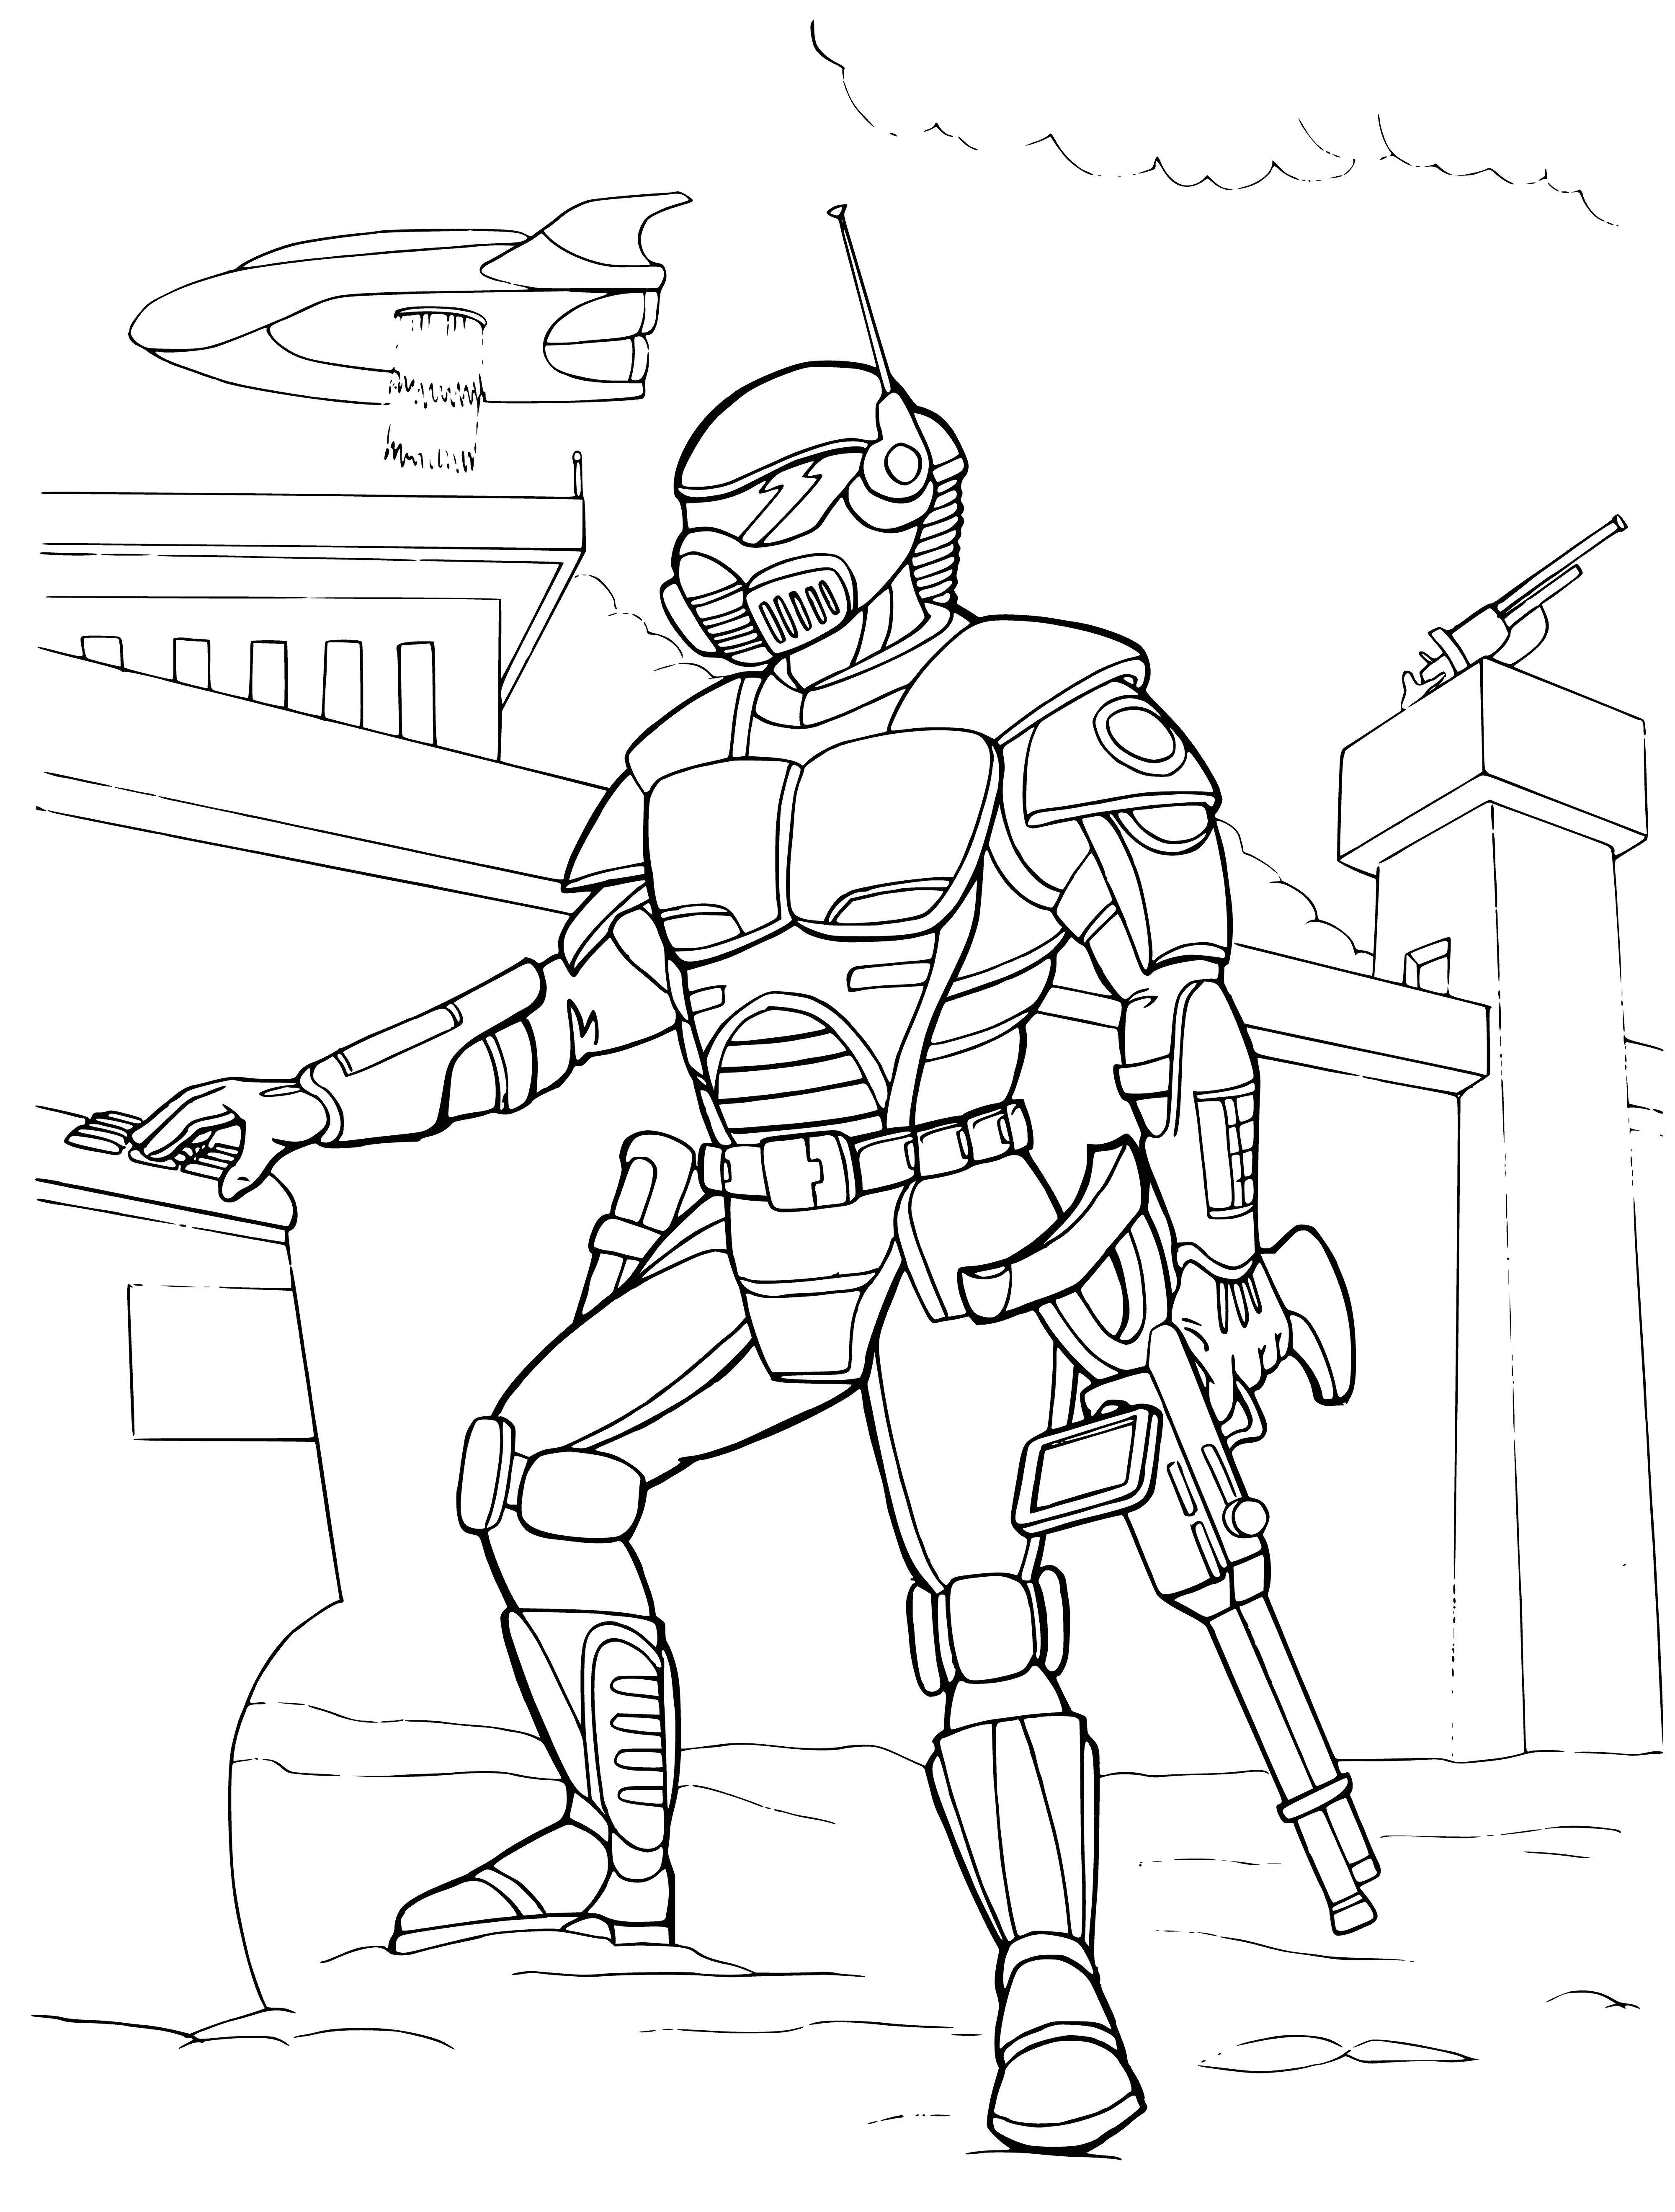 Mercenary warrior coloring page